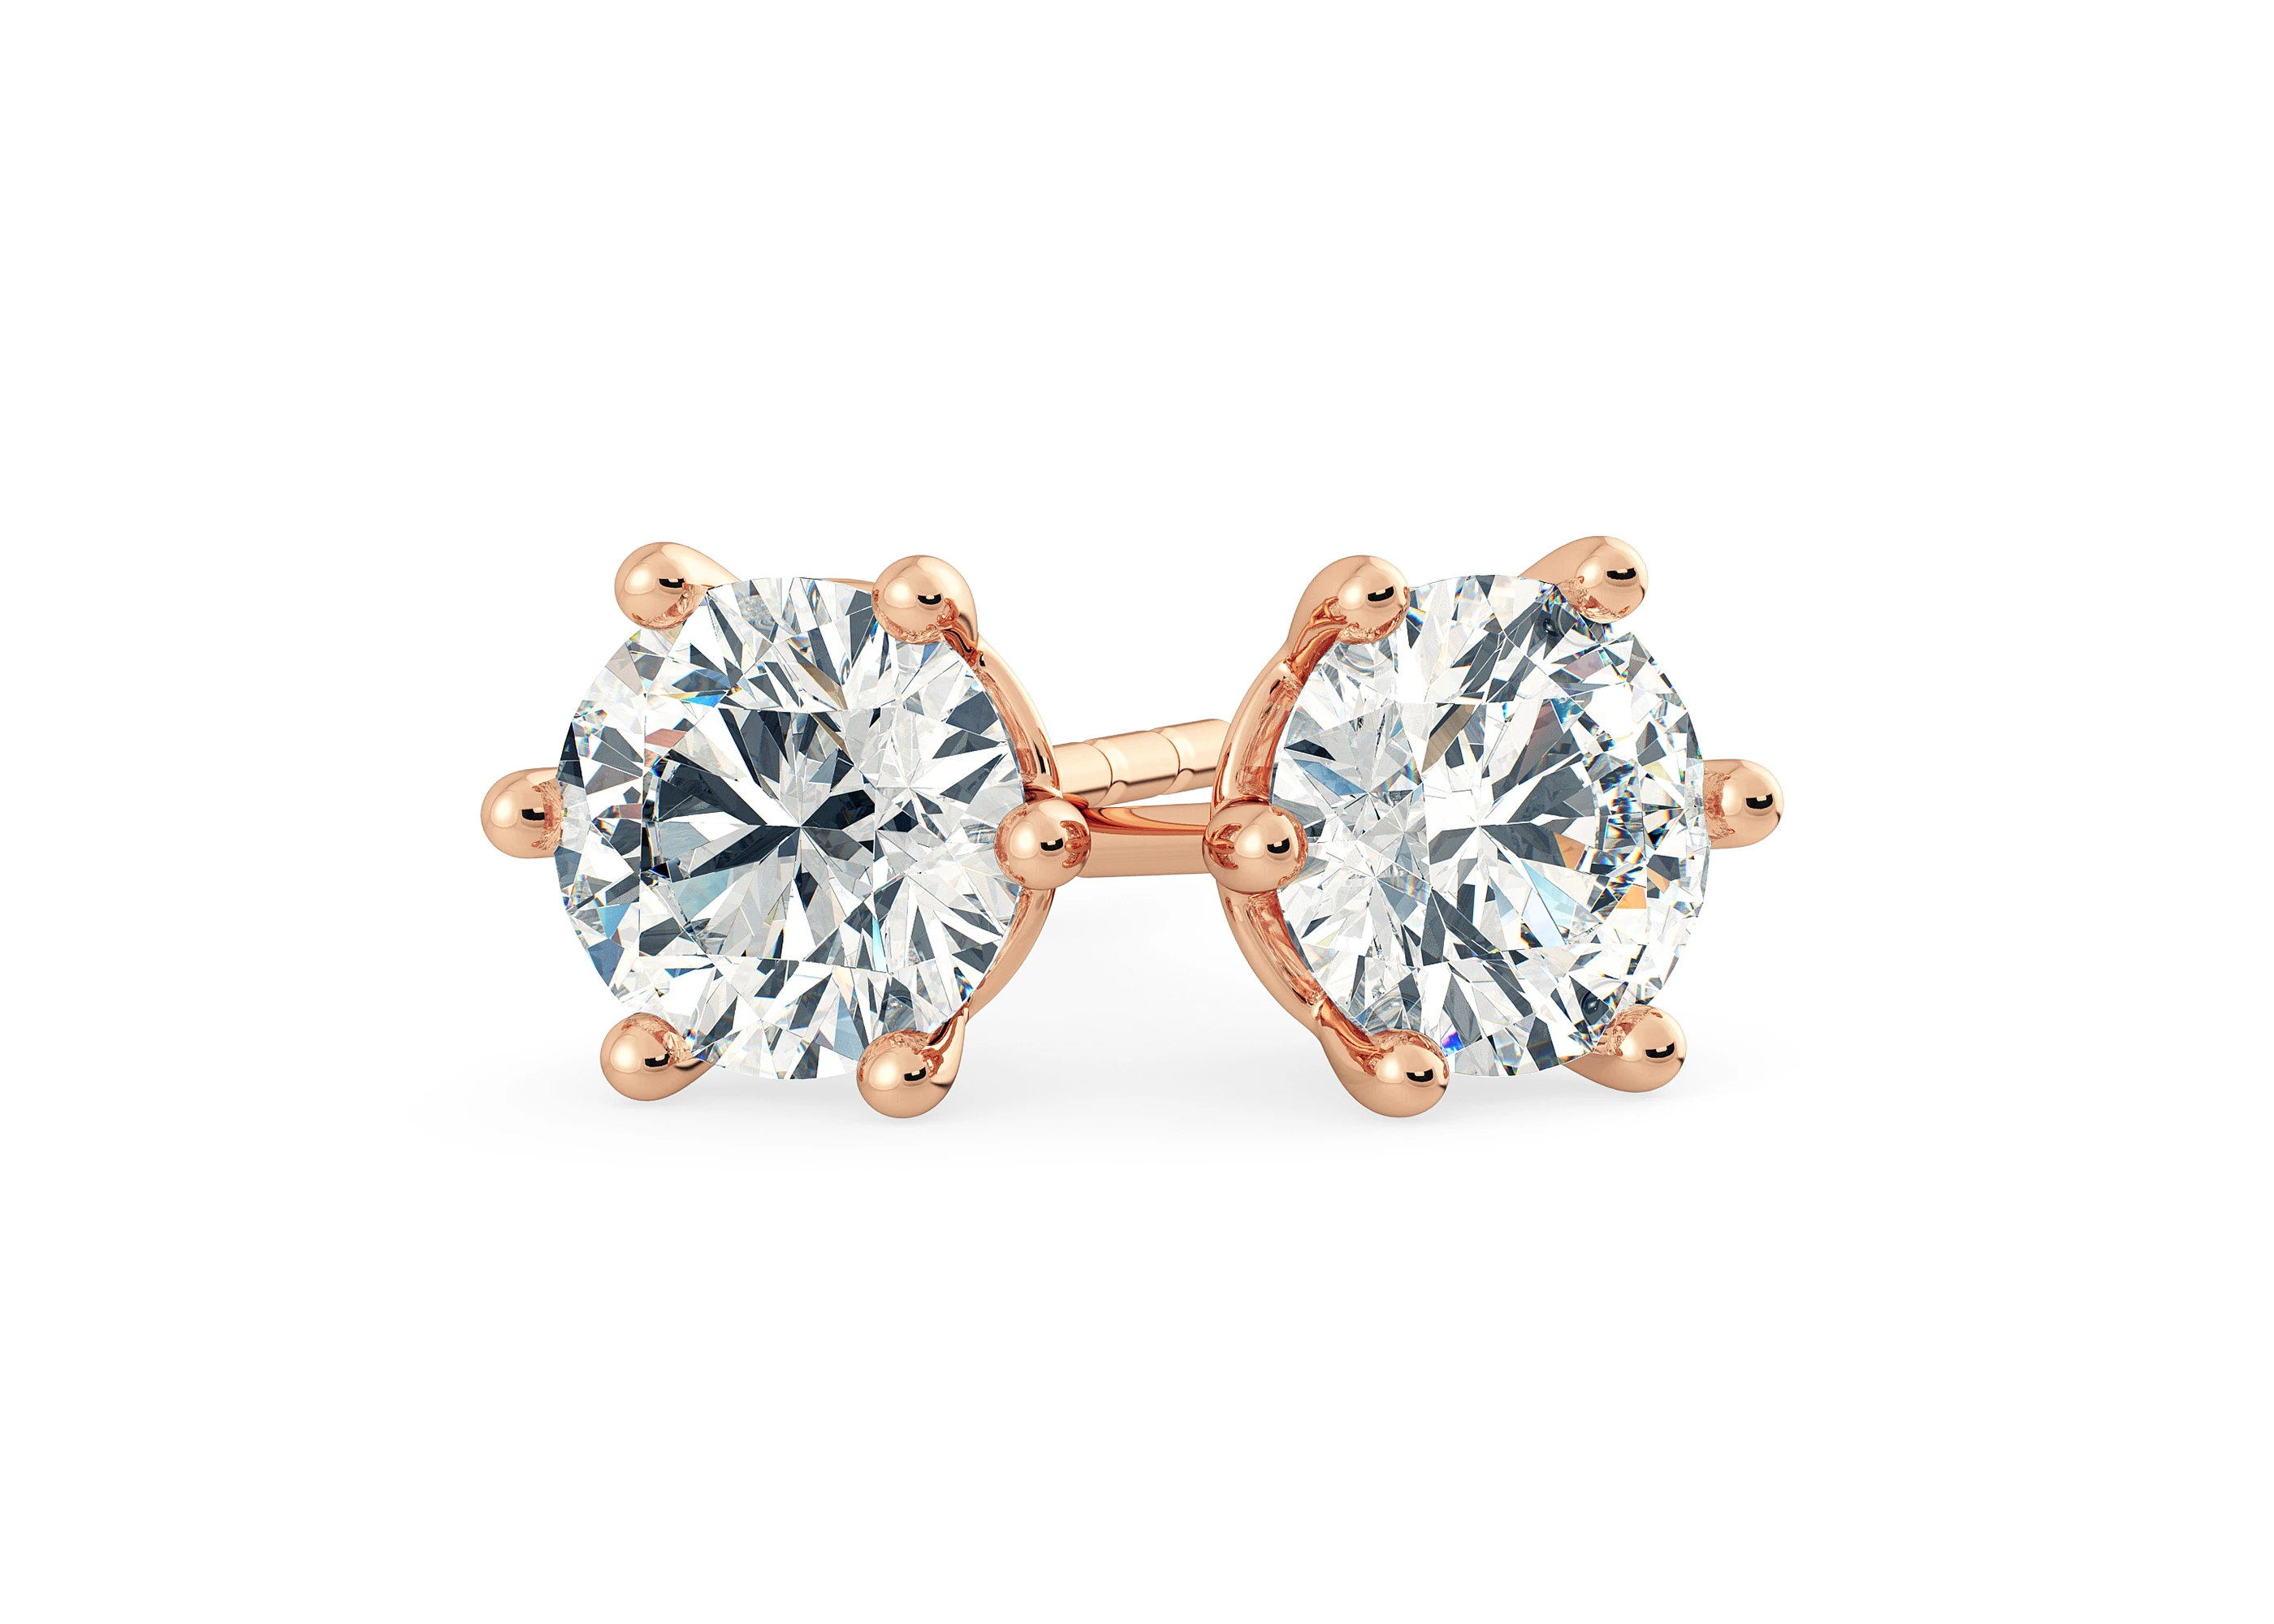 Bellezza Round Brilliant Diamond Stud Earrings in 18K Rose Gold with Screw Backs